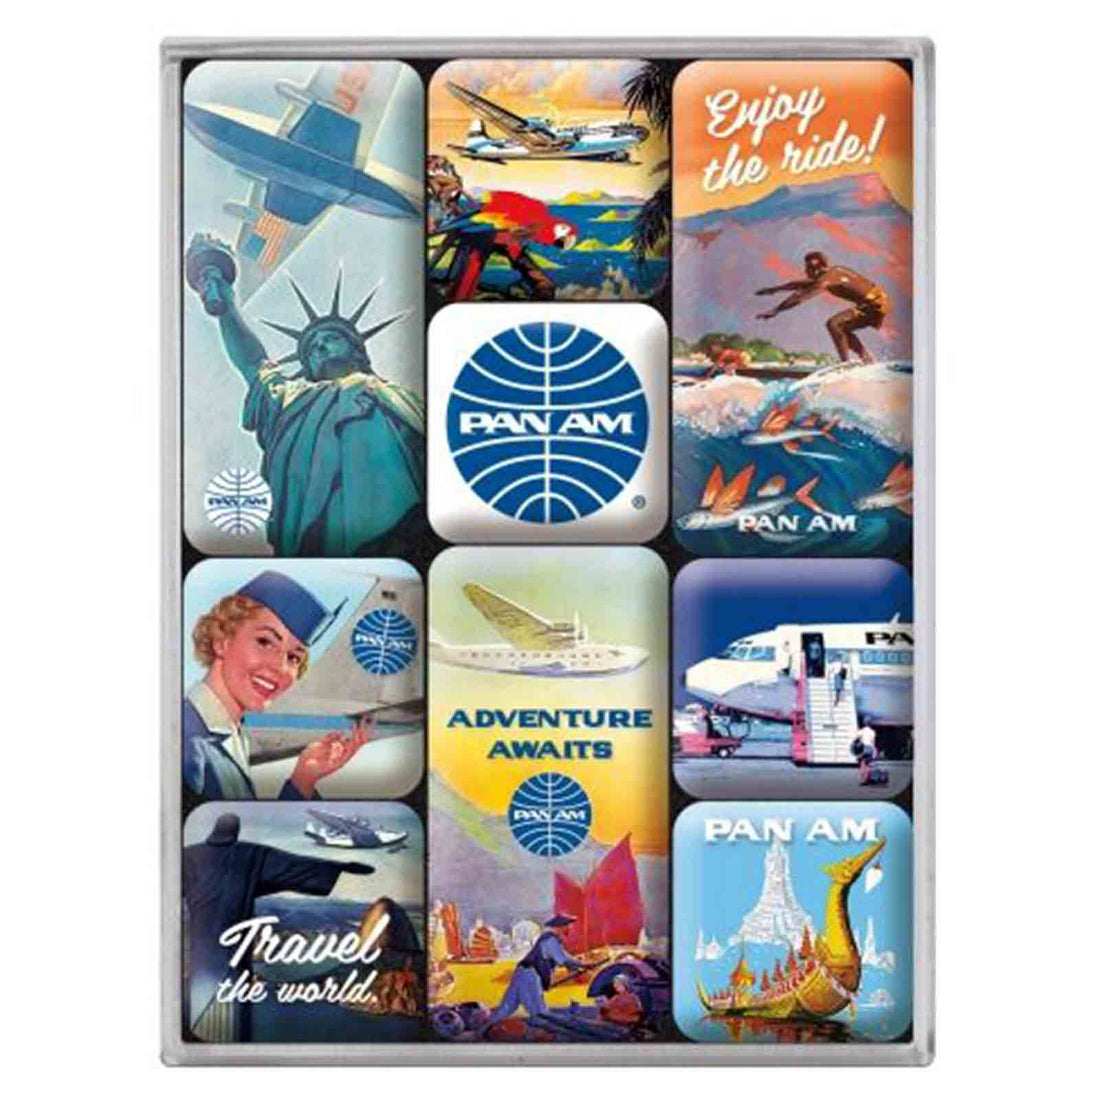 Pan Am Travel The World Posters Set of 9 Nostalgic Art Magnets